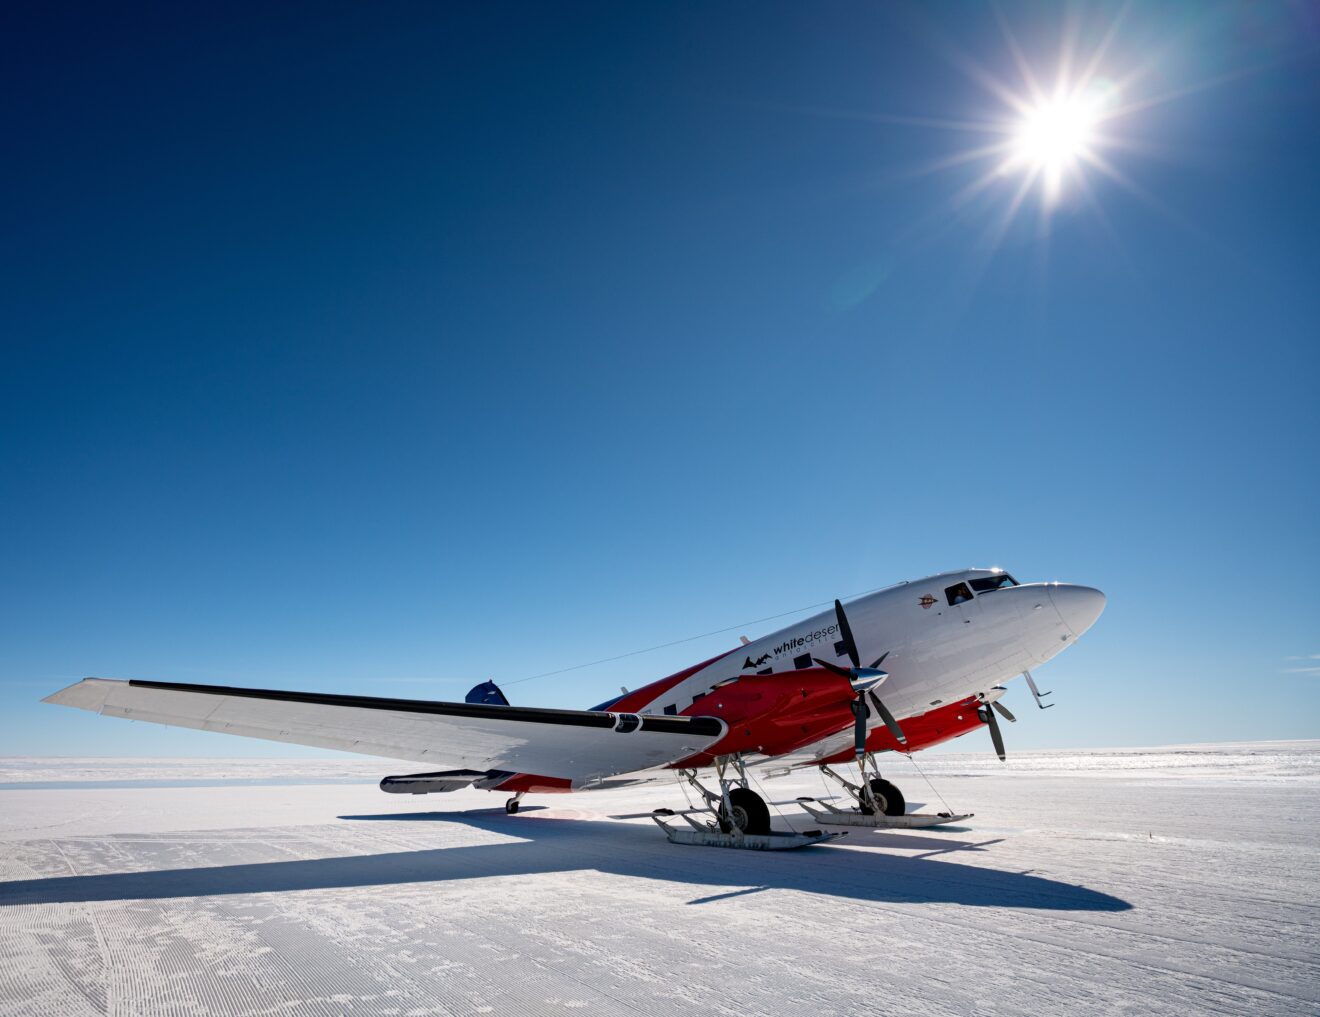 Basler aircraft on ice runway